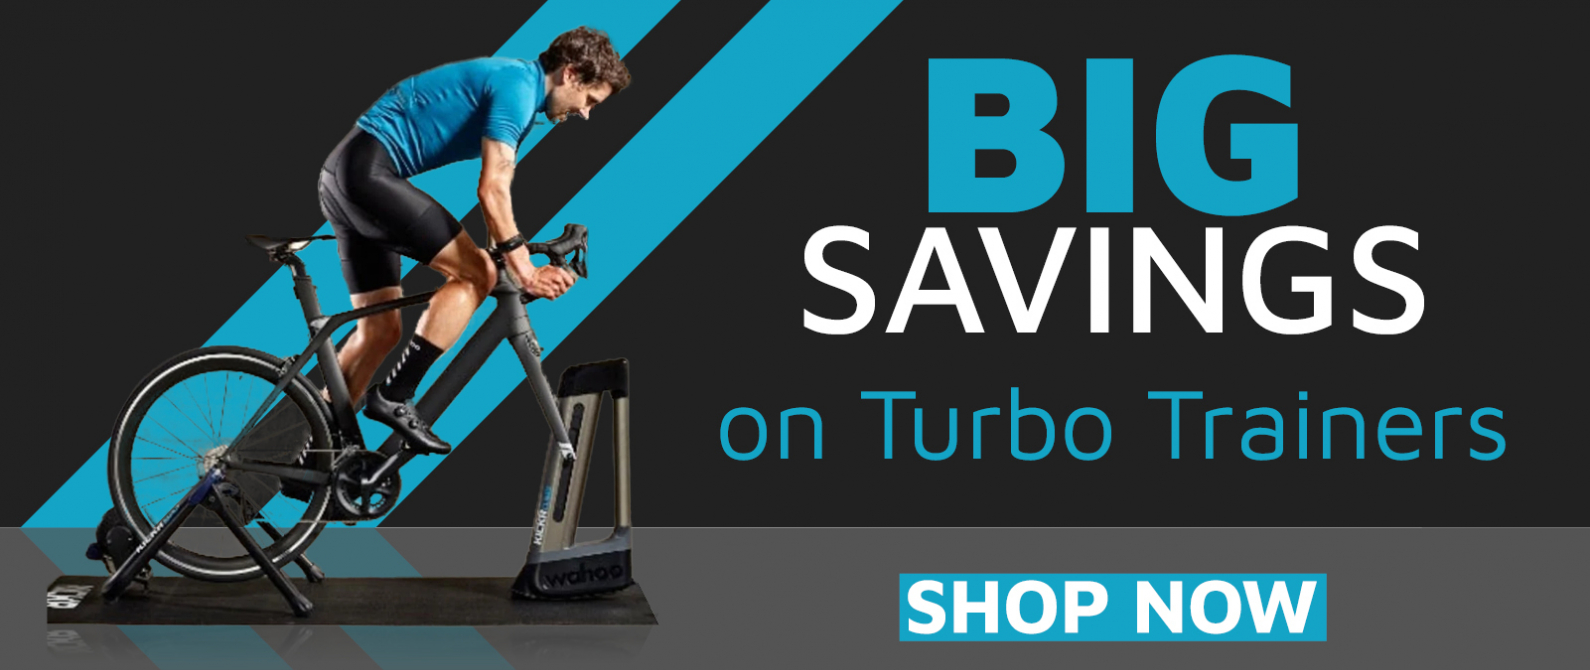 Turbo trainer sale